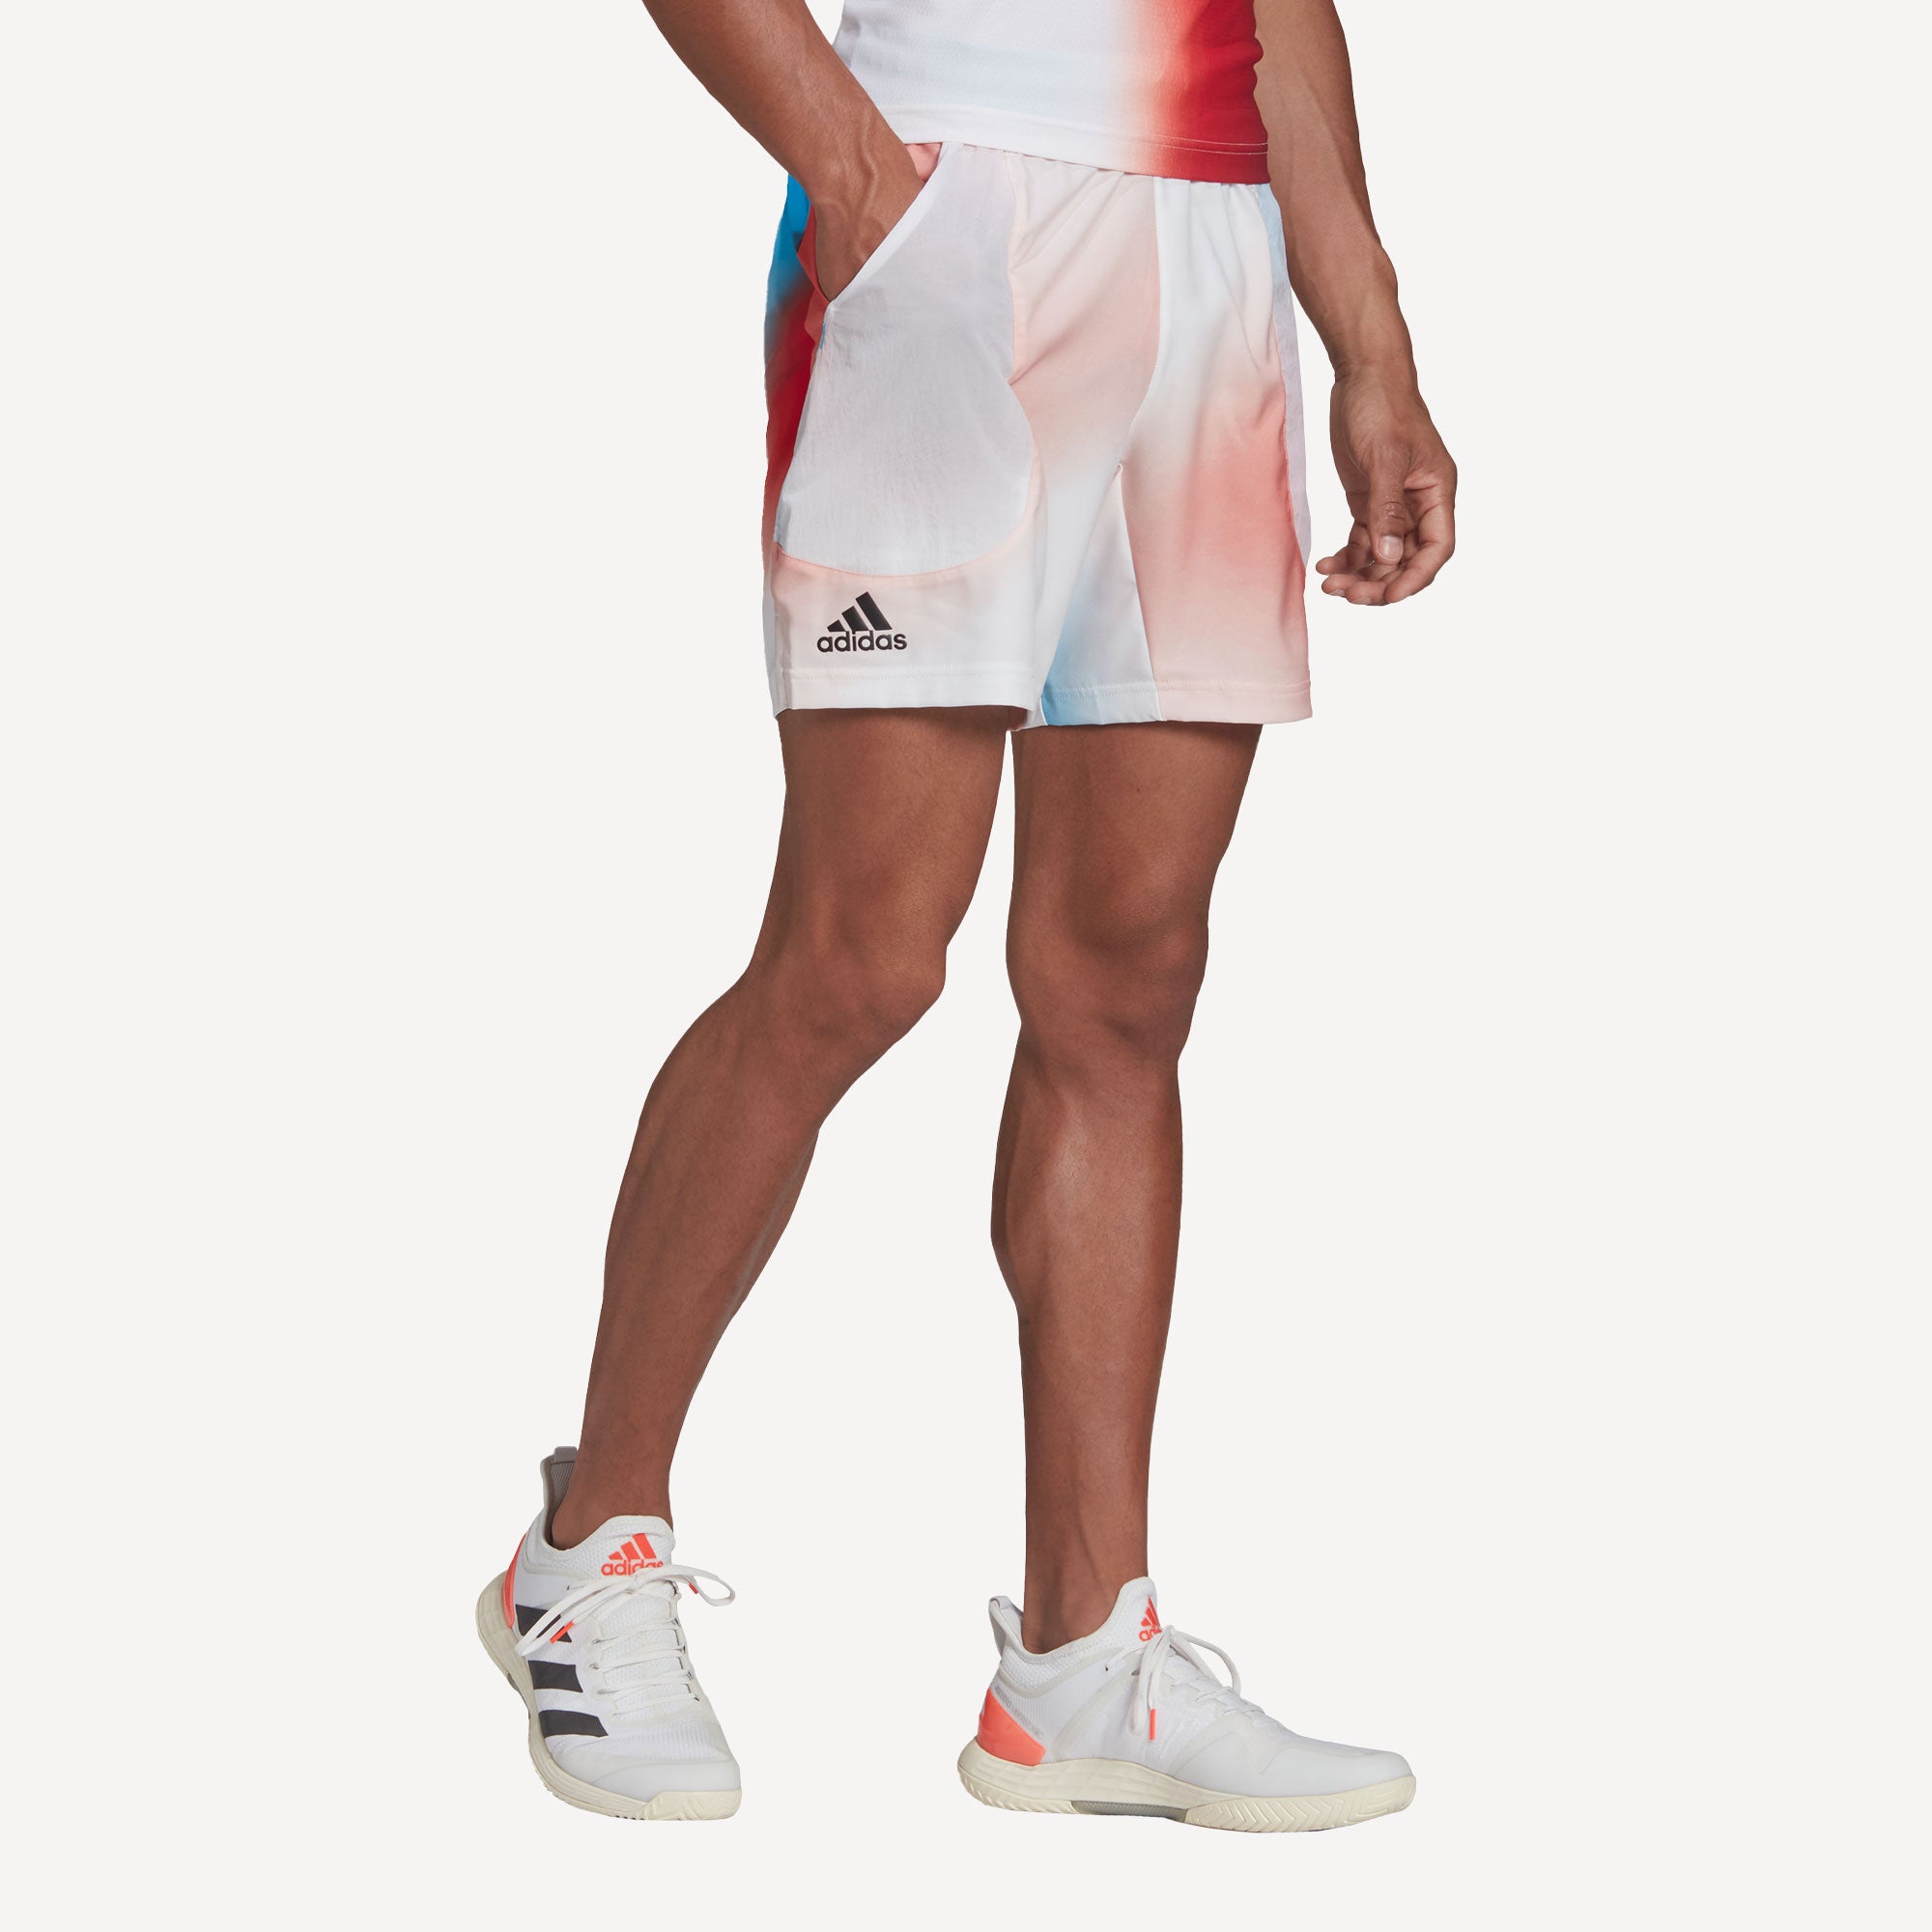 adidas Melbourne Men's Printed 7-Inch Tennis Shorts White (1)